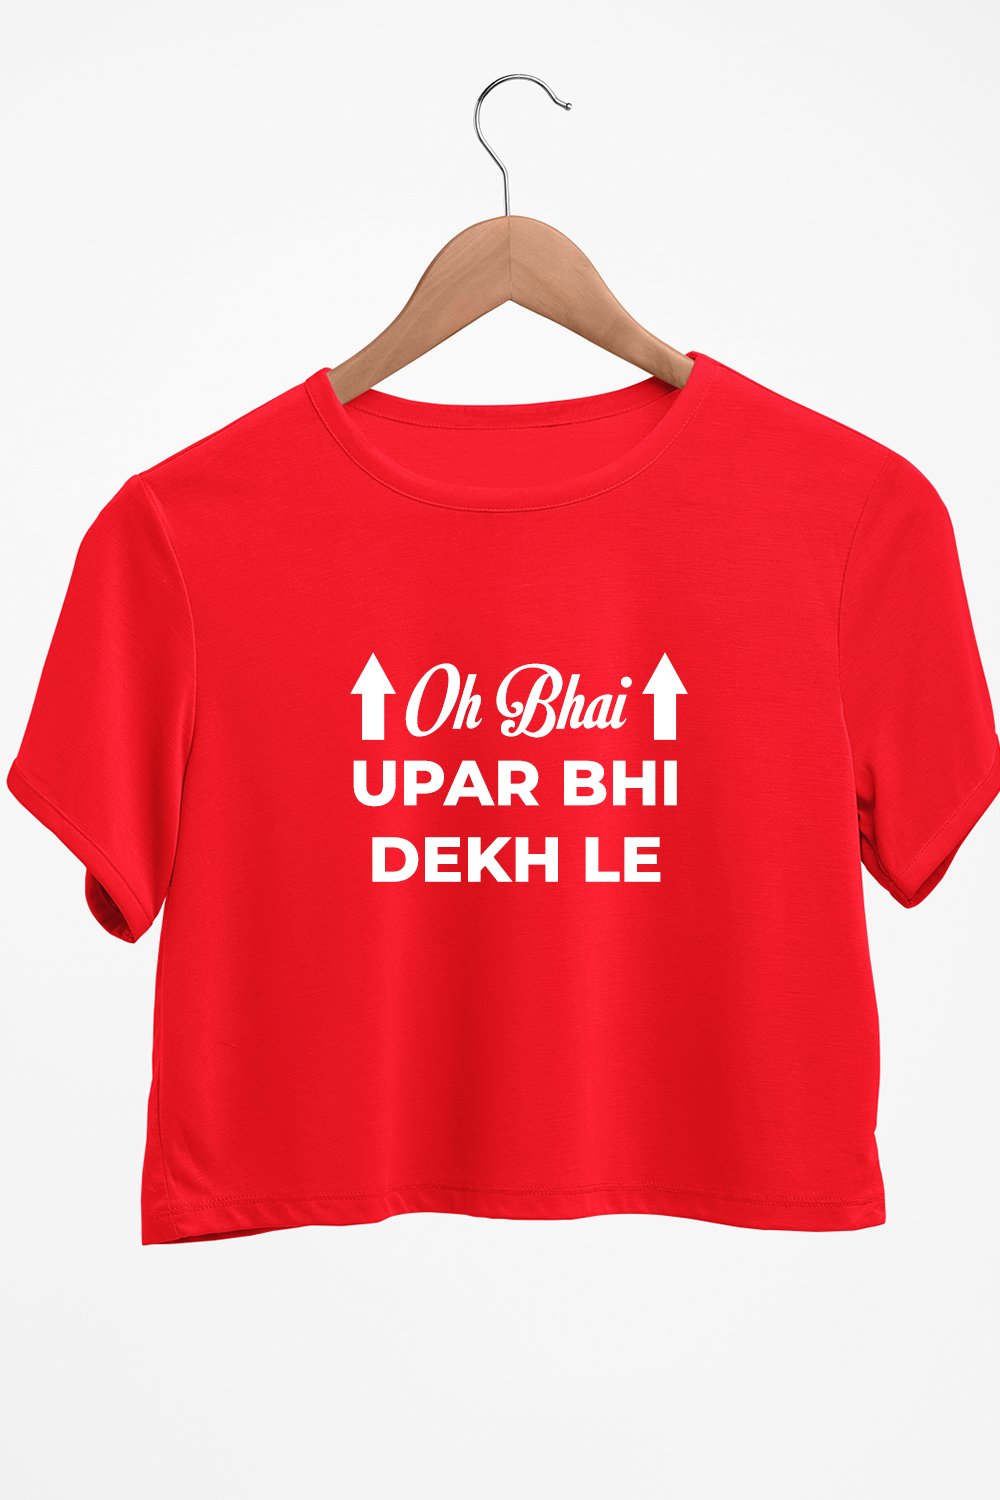 Upar Bhi Dekh Le Graphic Printed Red Crop Top